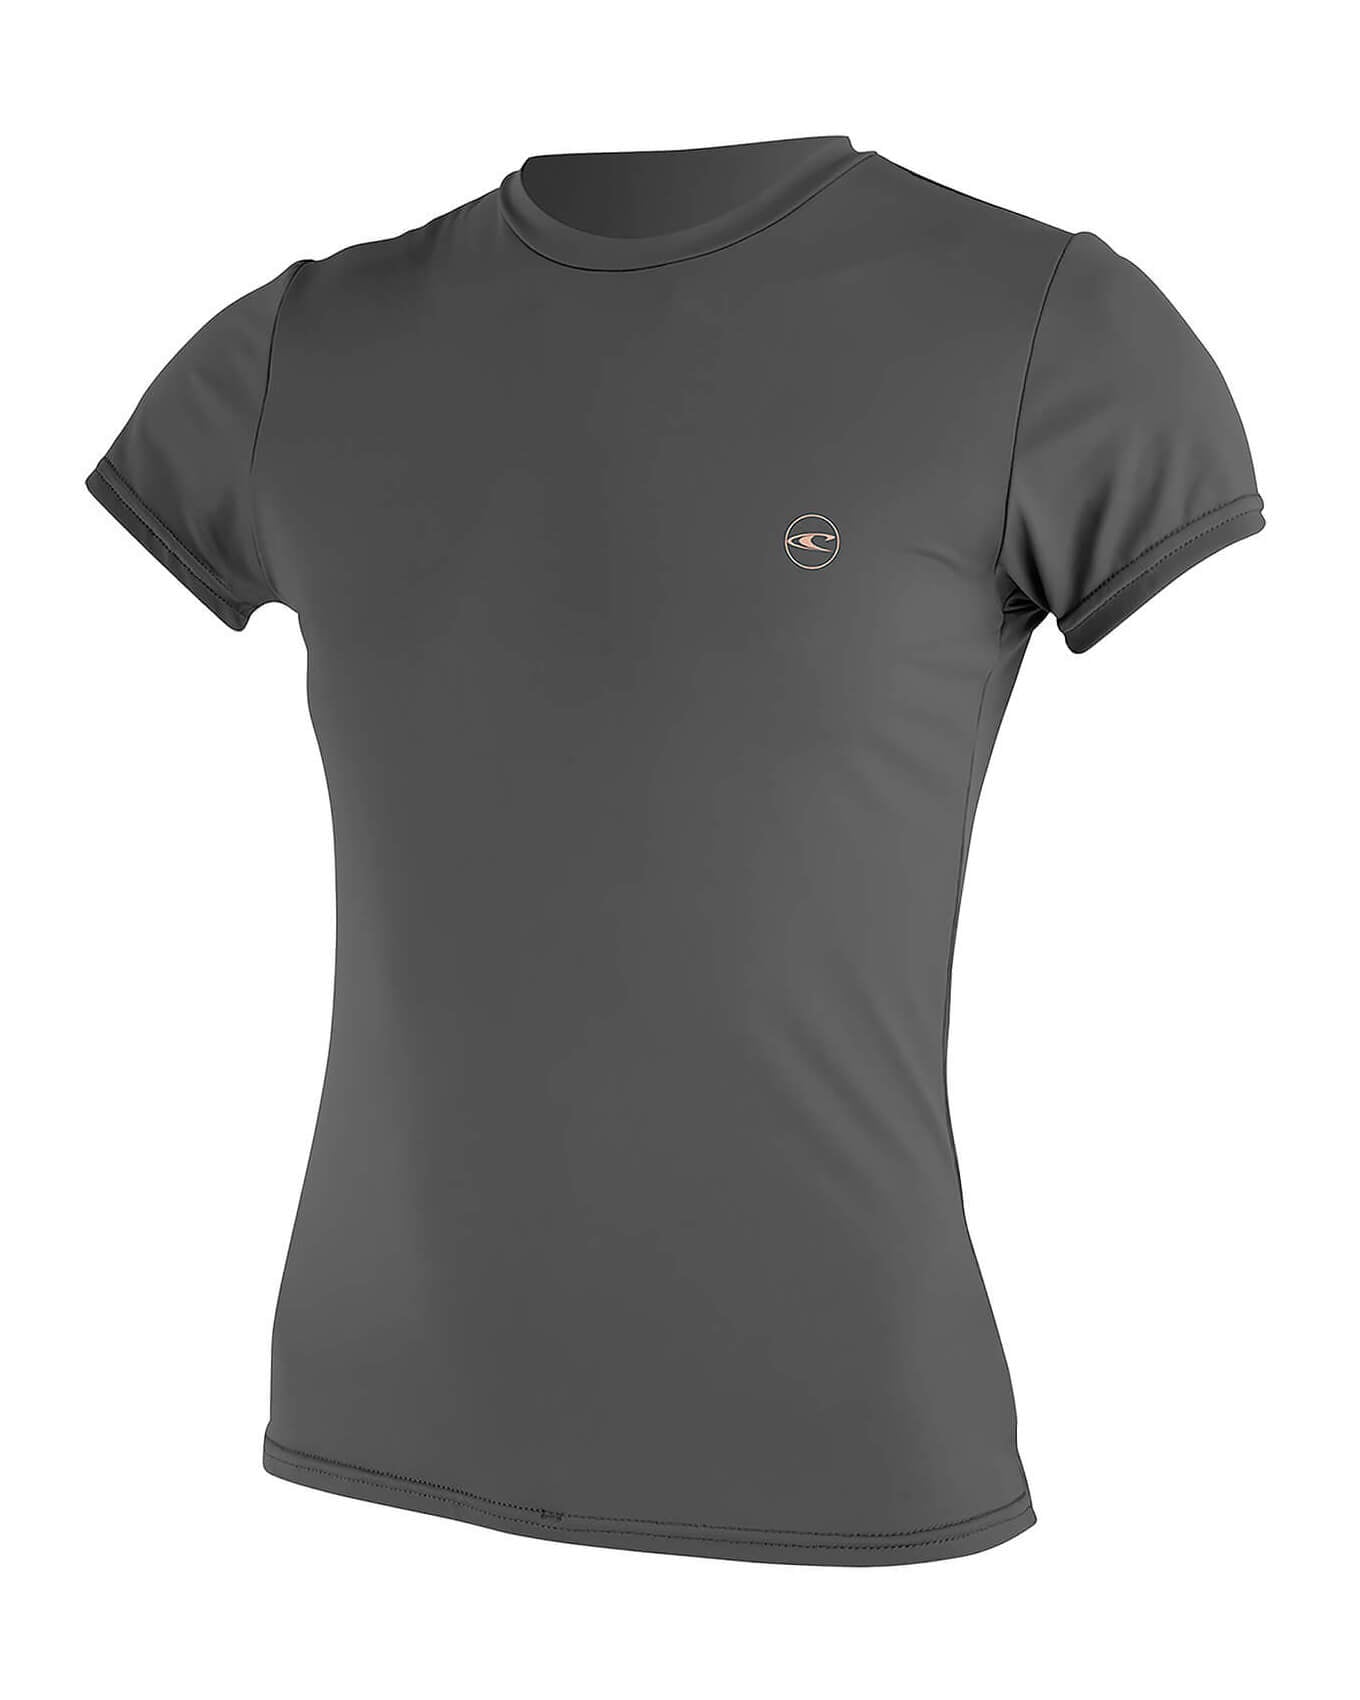 Women's O'Neill BASIC 30+ S/S Sun Shirt